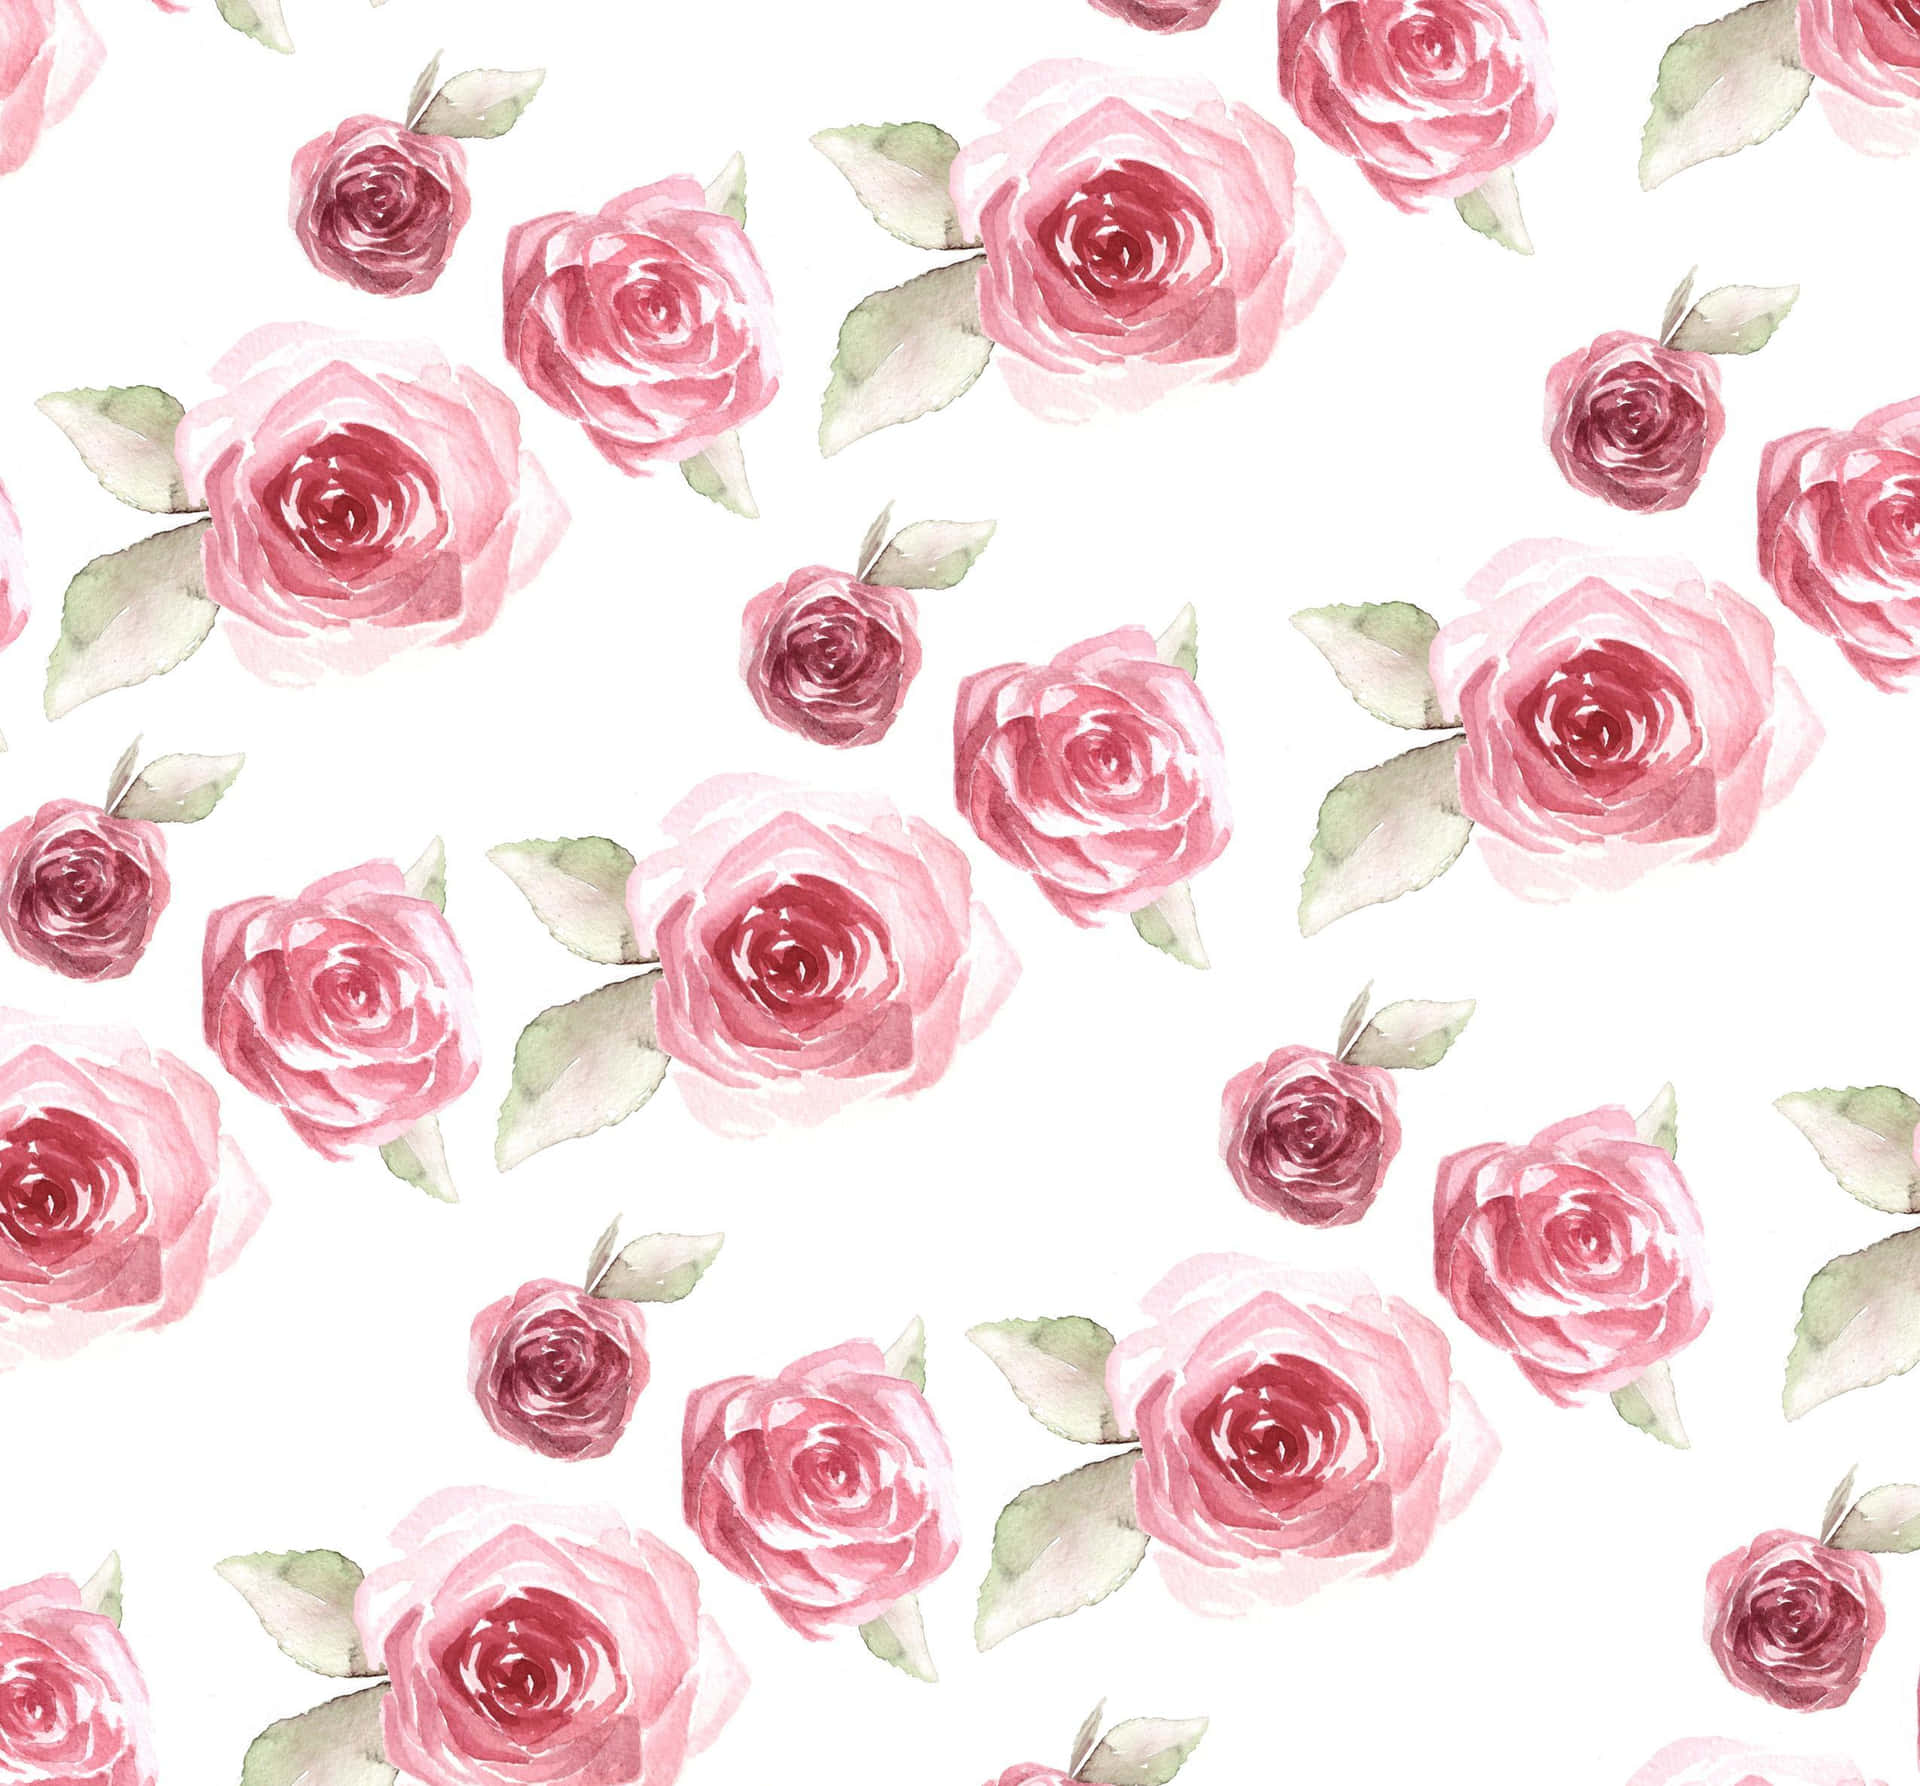 Caption: Captivating Rose Art in Vibrant Colors Wallpaper